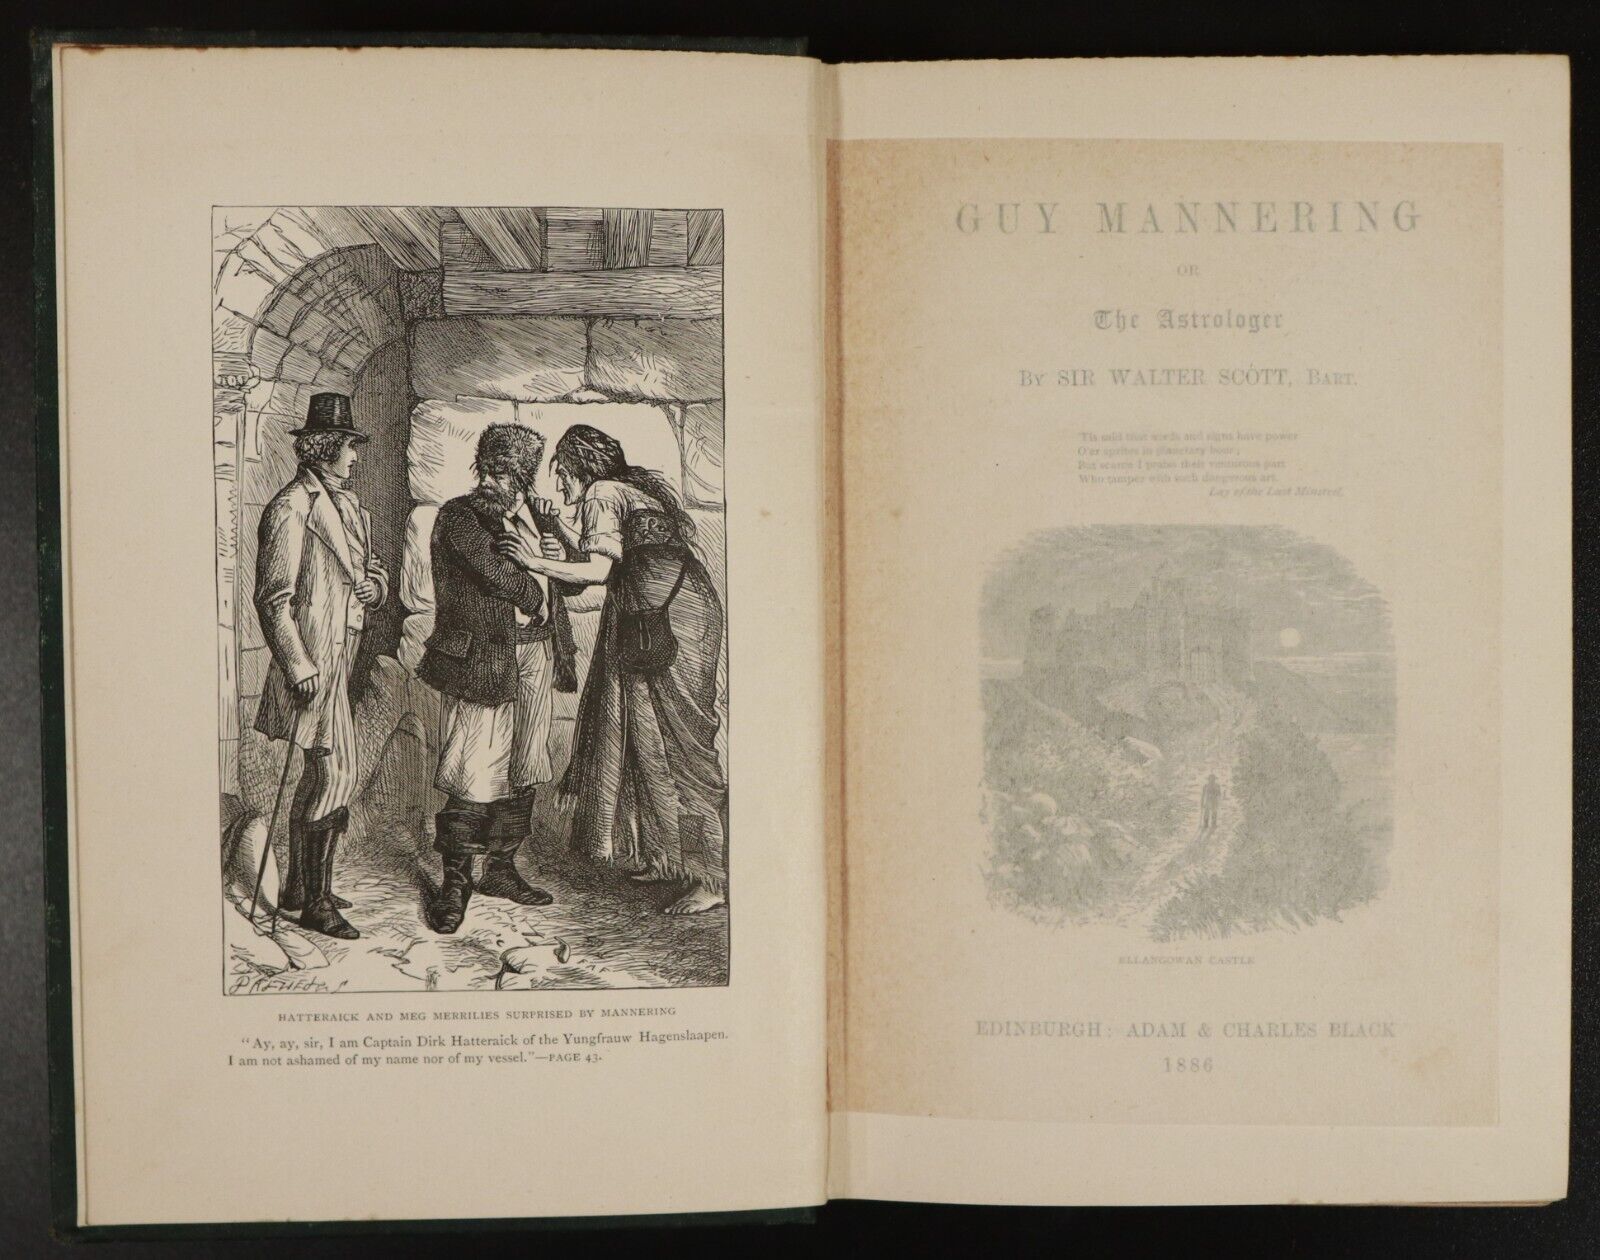 1886 Guy Mannering by Walter Scott Antique Fiction Book Waverley Novels - 0